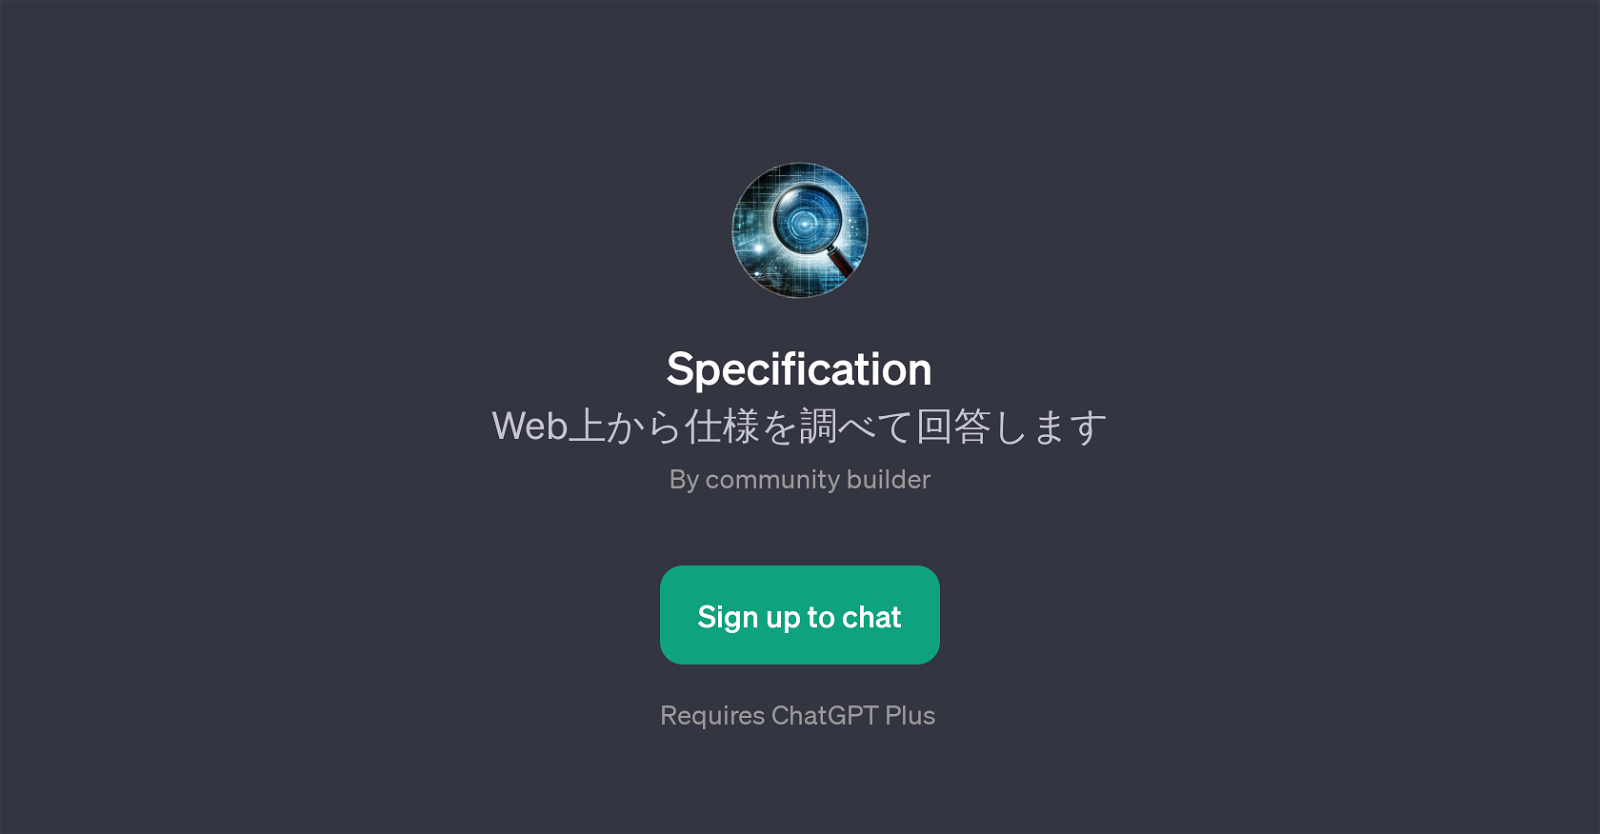 Specification website